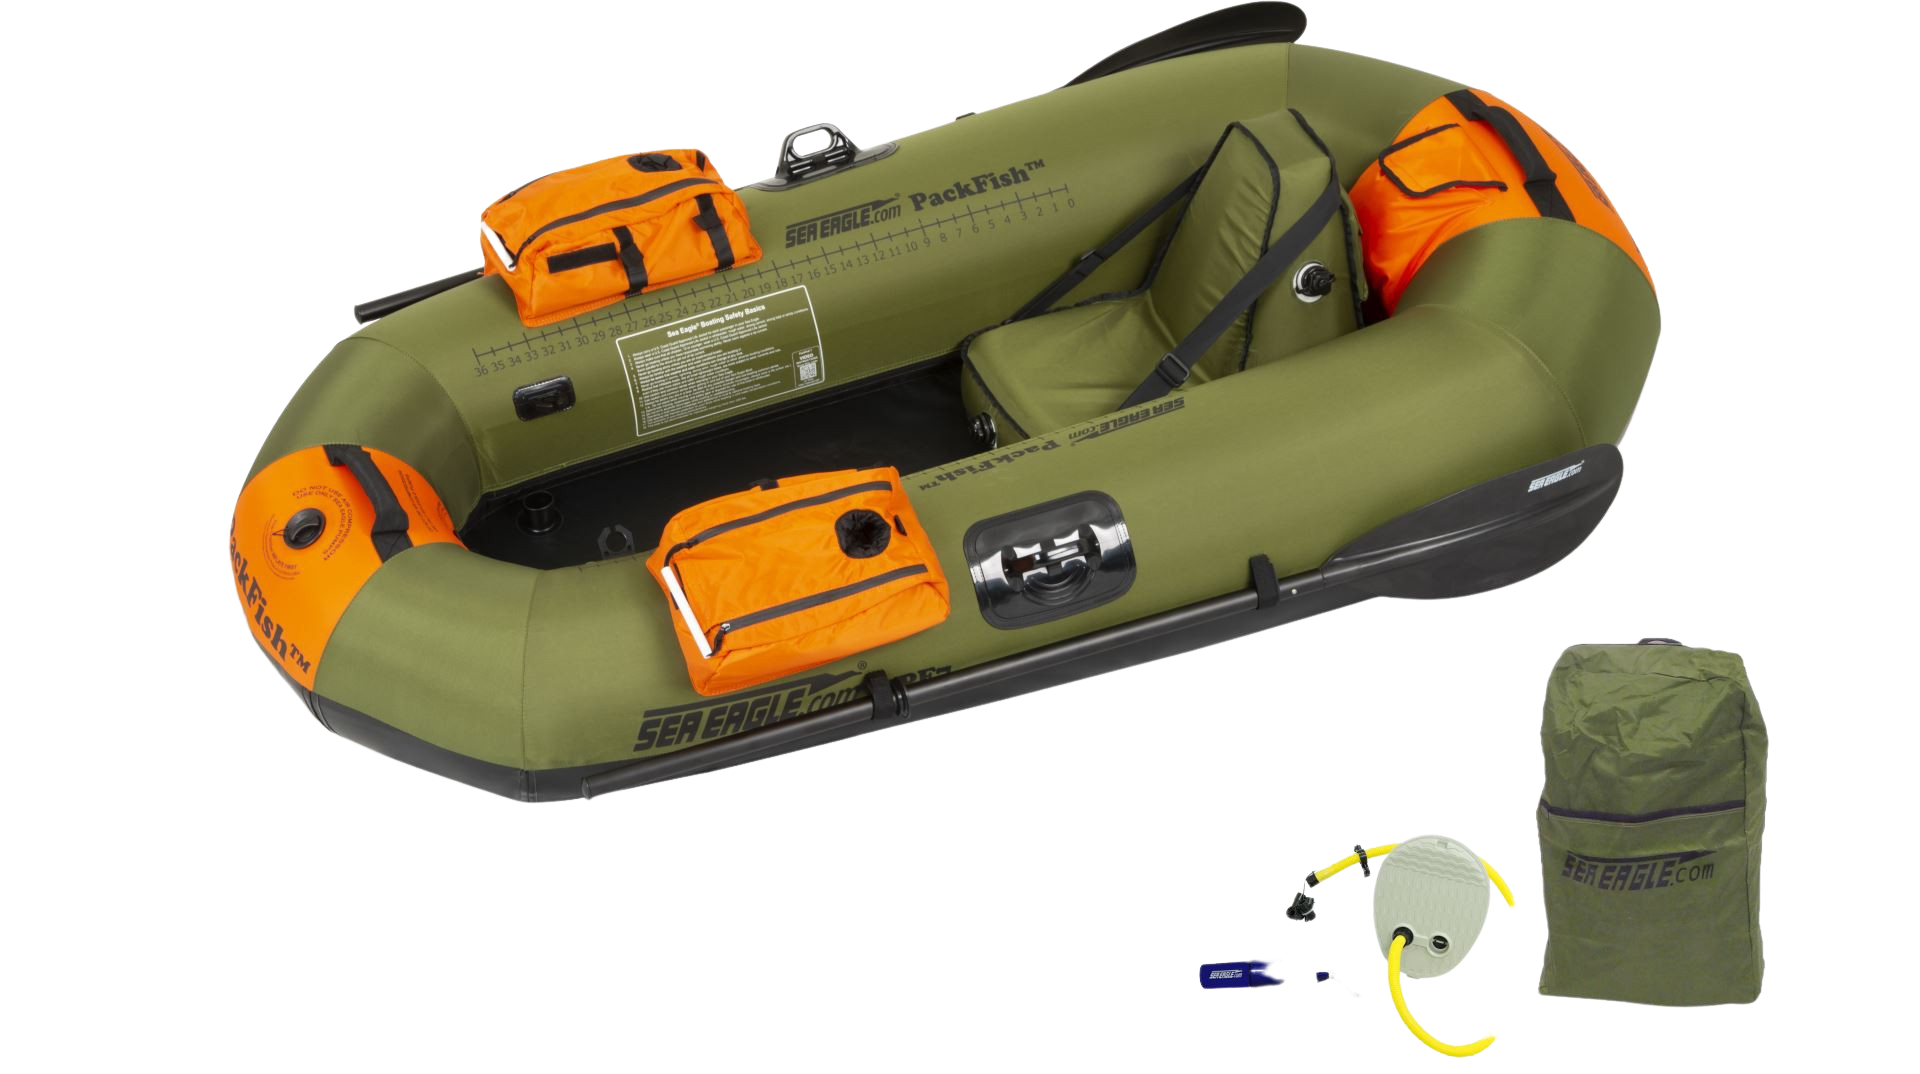 Sea Eagle, Sea Eagle PackFish 7 Inflatable Boat Pro Fishing Package Green Orange New